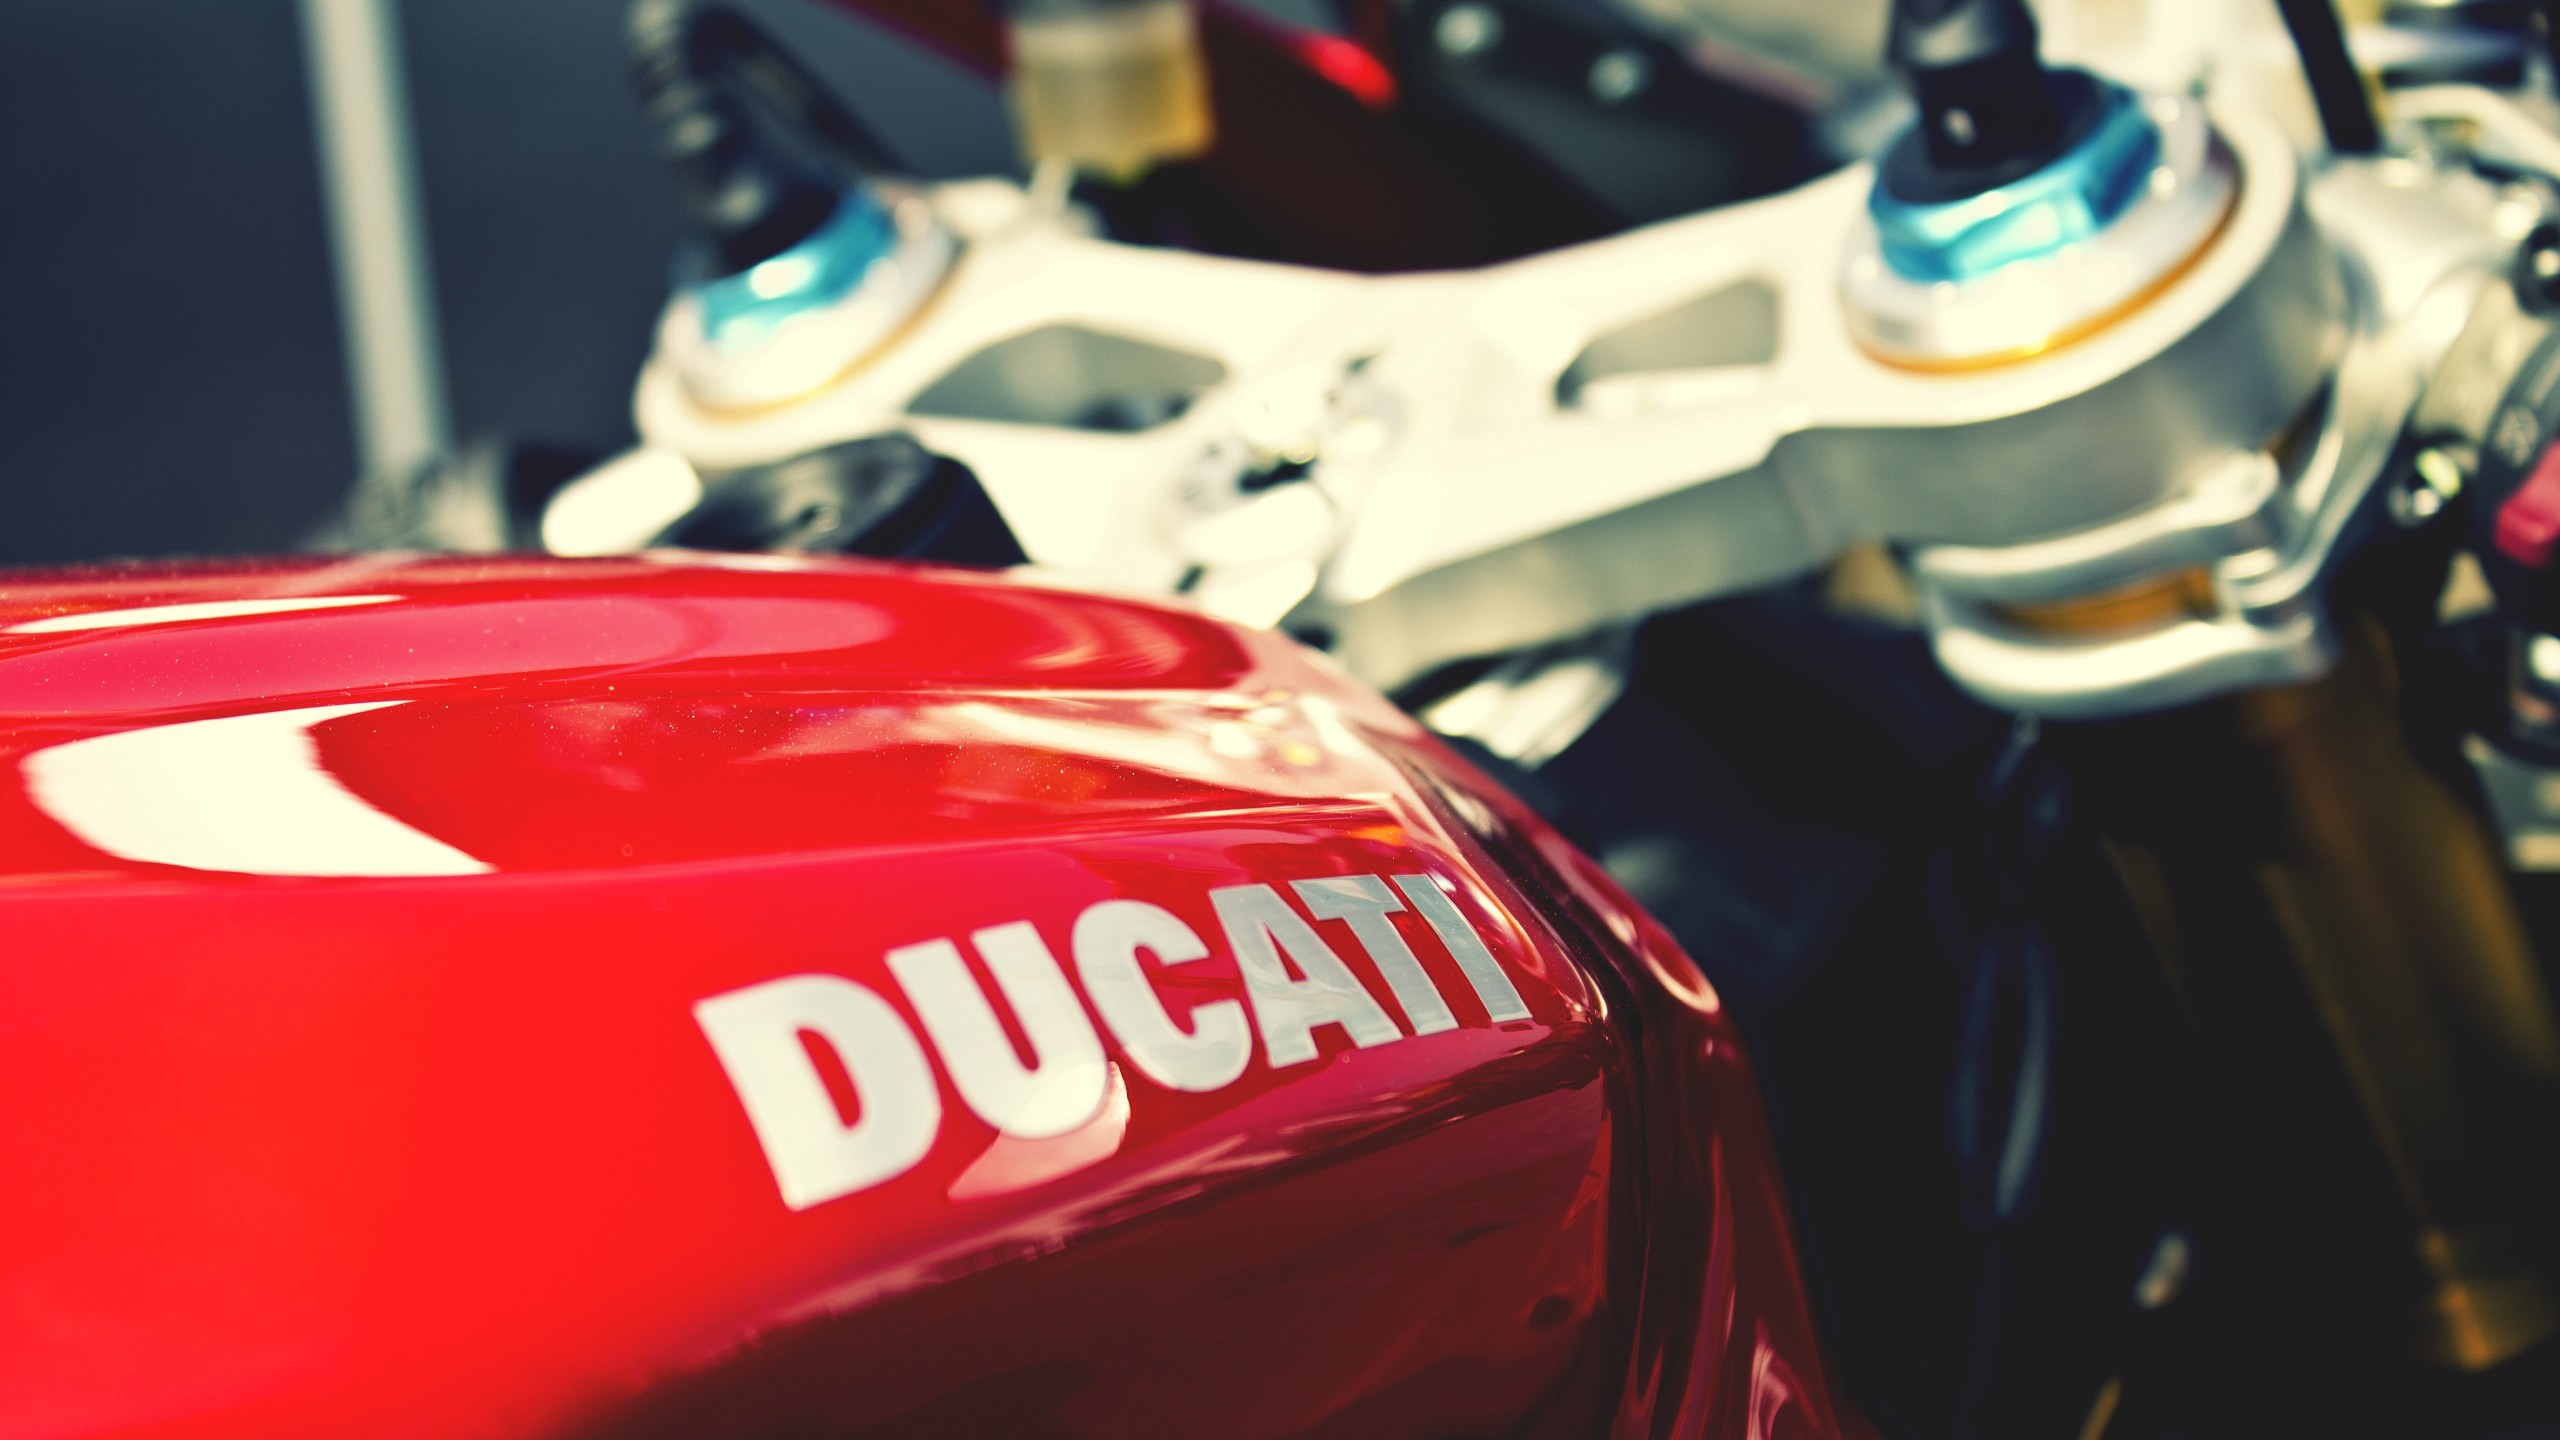 ducati, vehicles, motorcycles